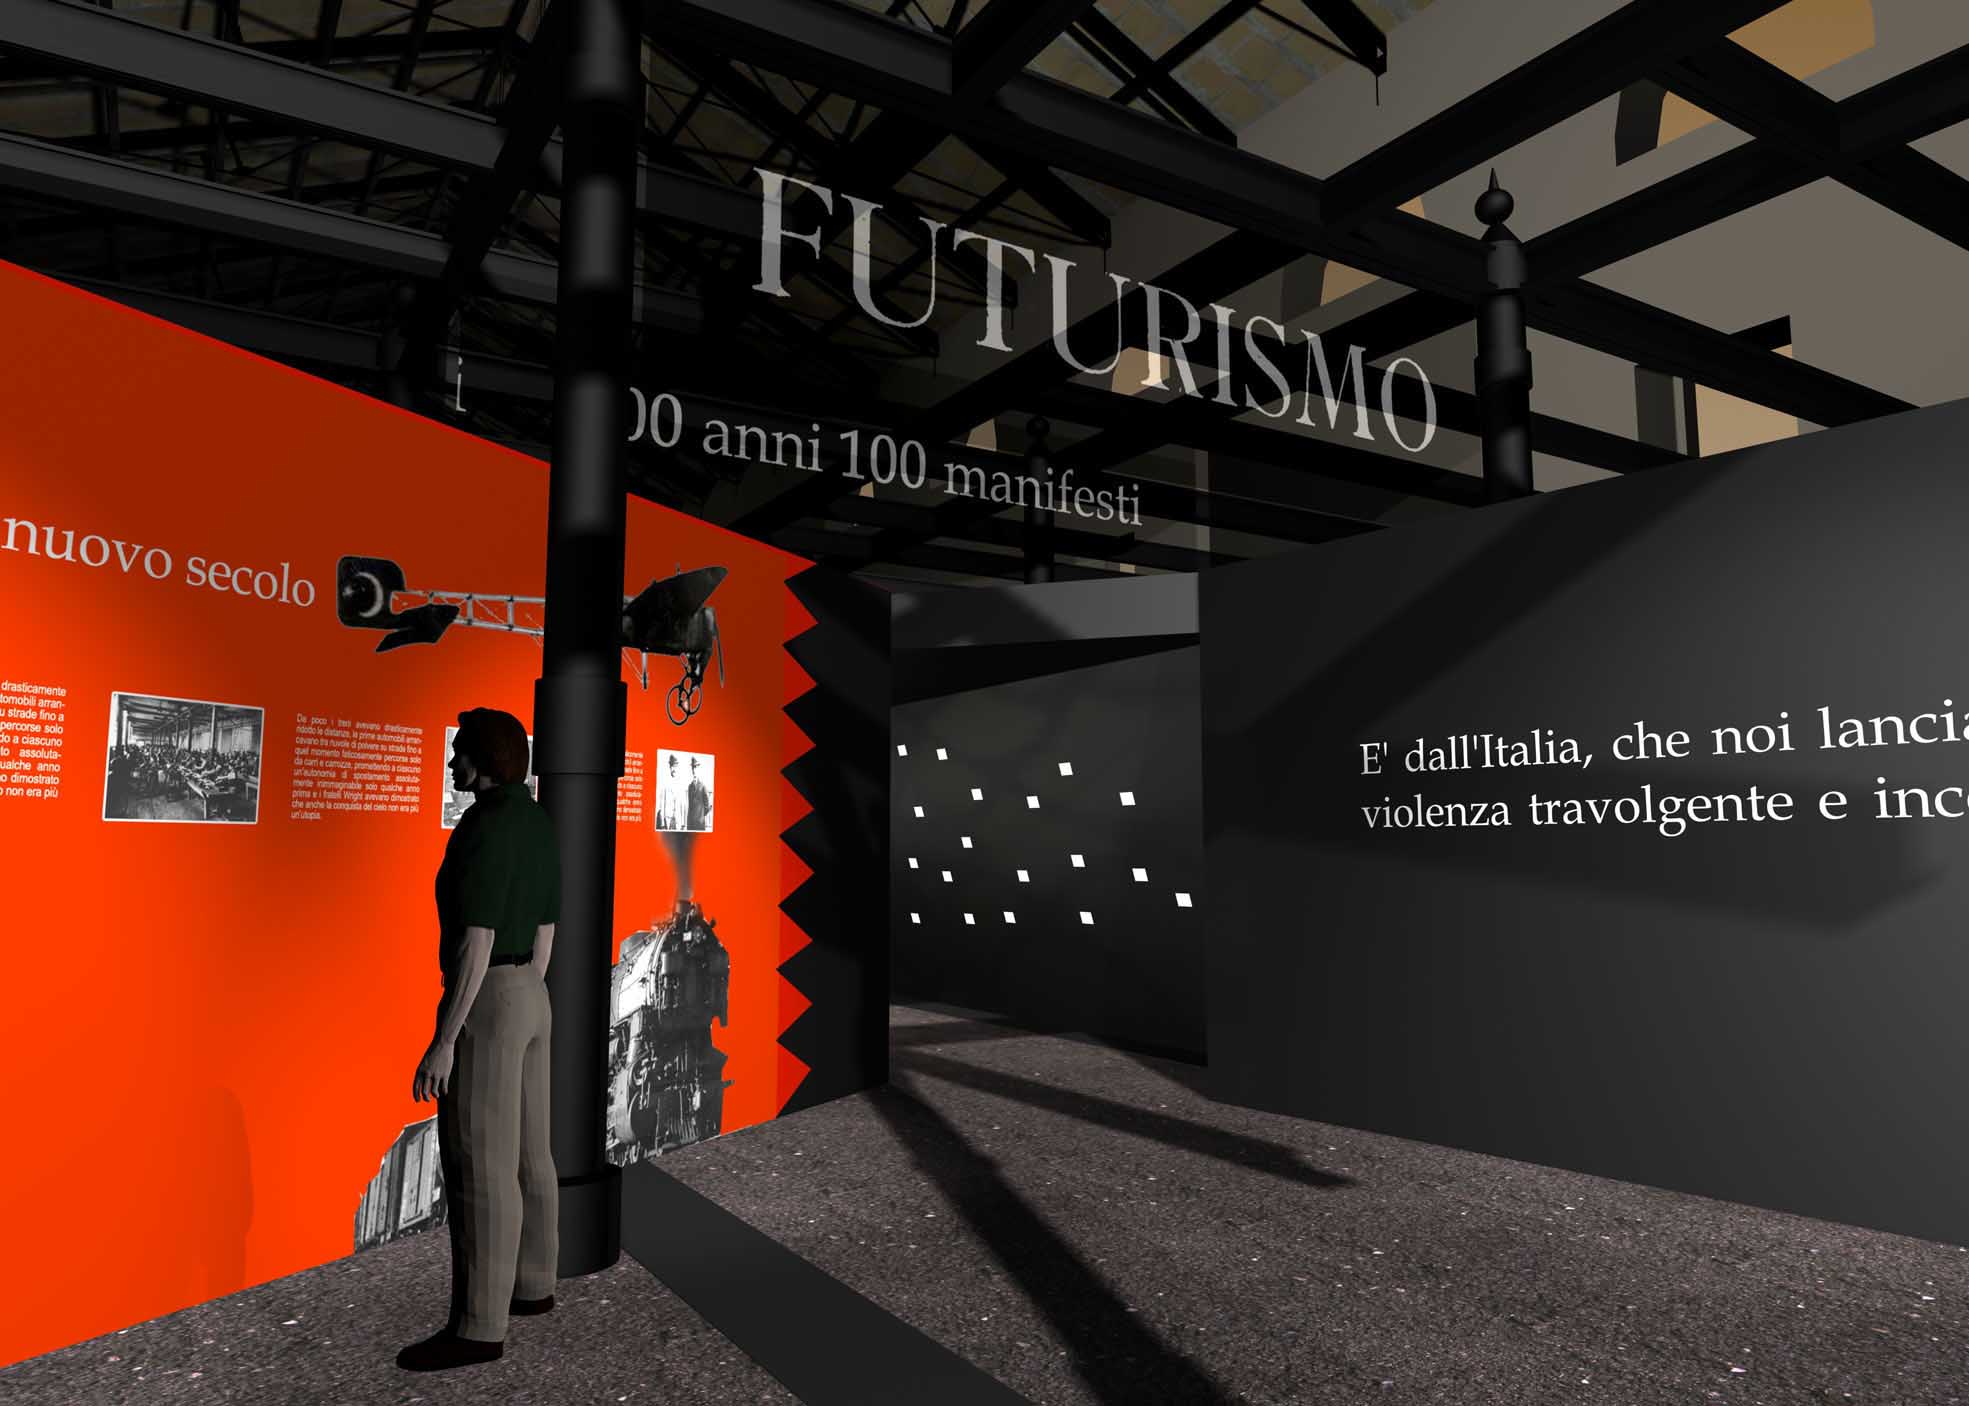 Check out Futurismo Manifesto 100×100, now in Naples